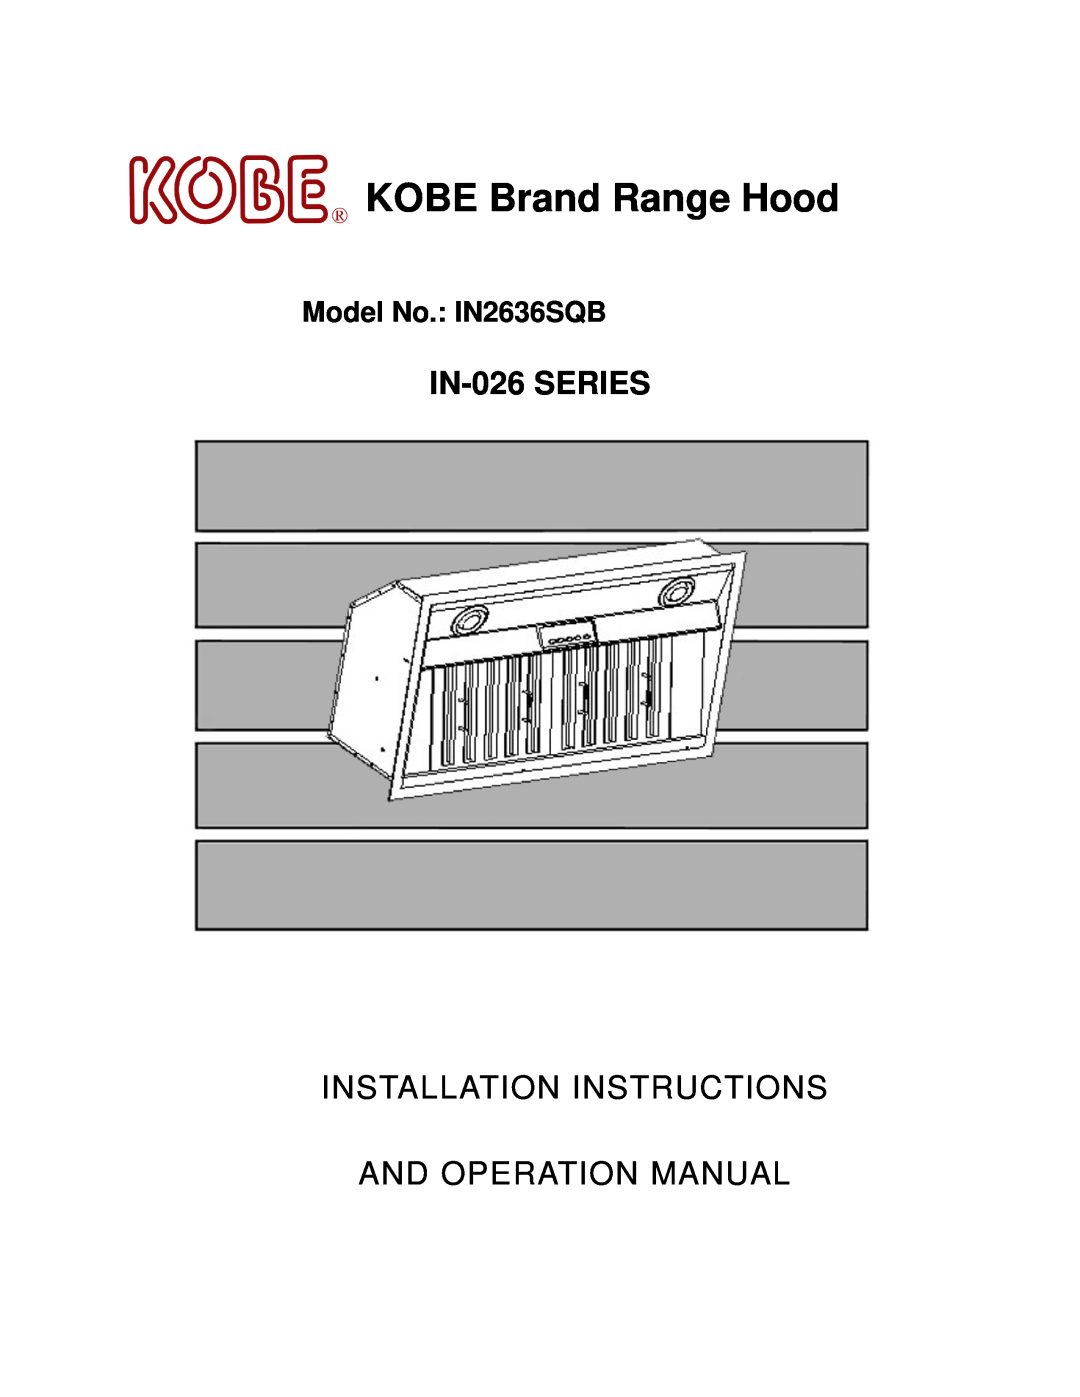 Kobe Range Hoods IN-026 SERIES installation instructions Model No. IN2636SQB, KOBE Brand Range Hood 